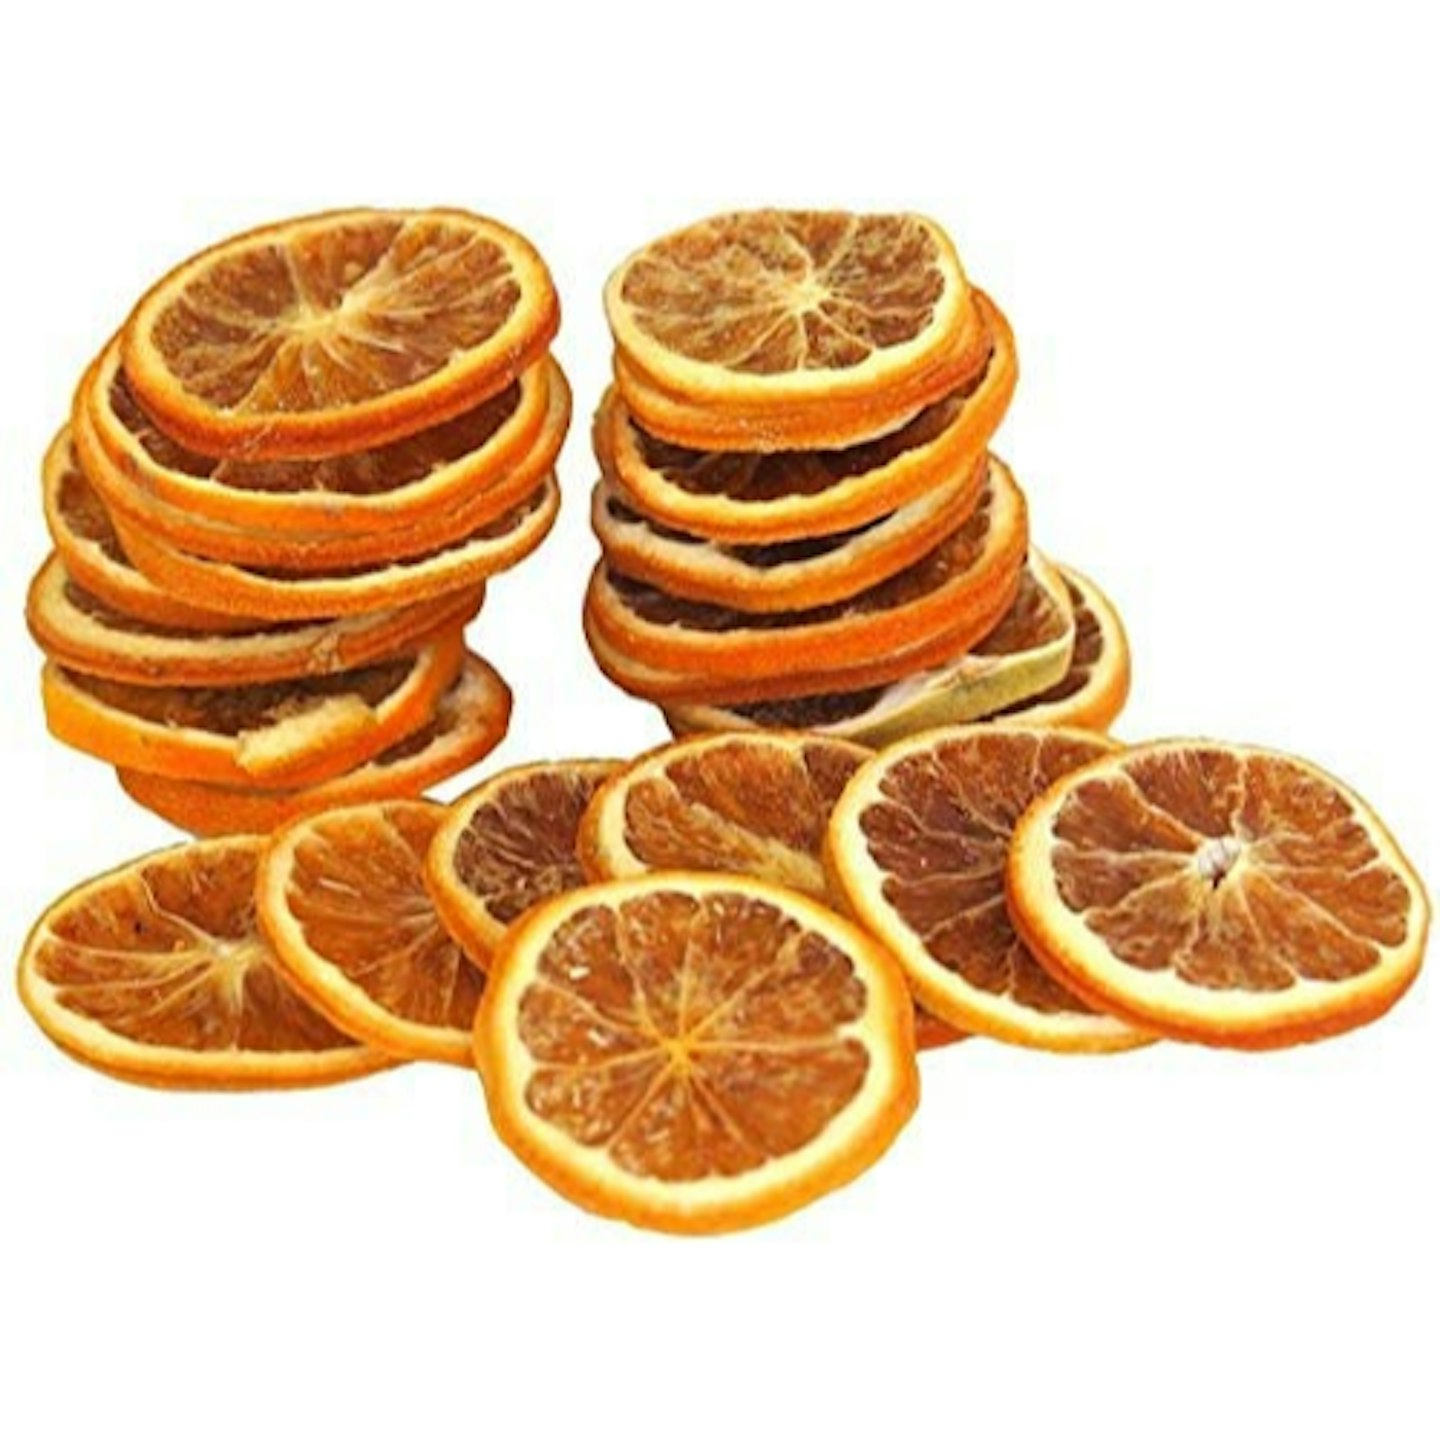 15 dried orange slices